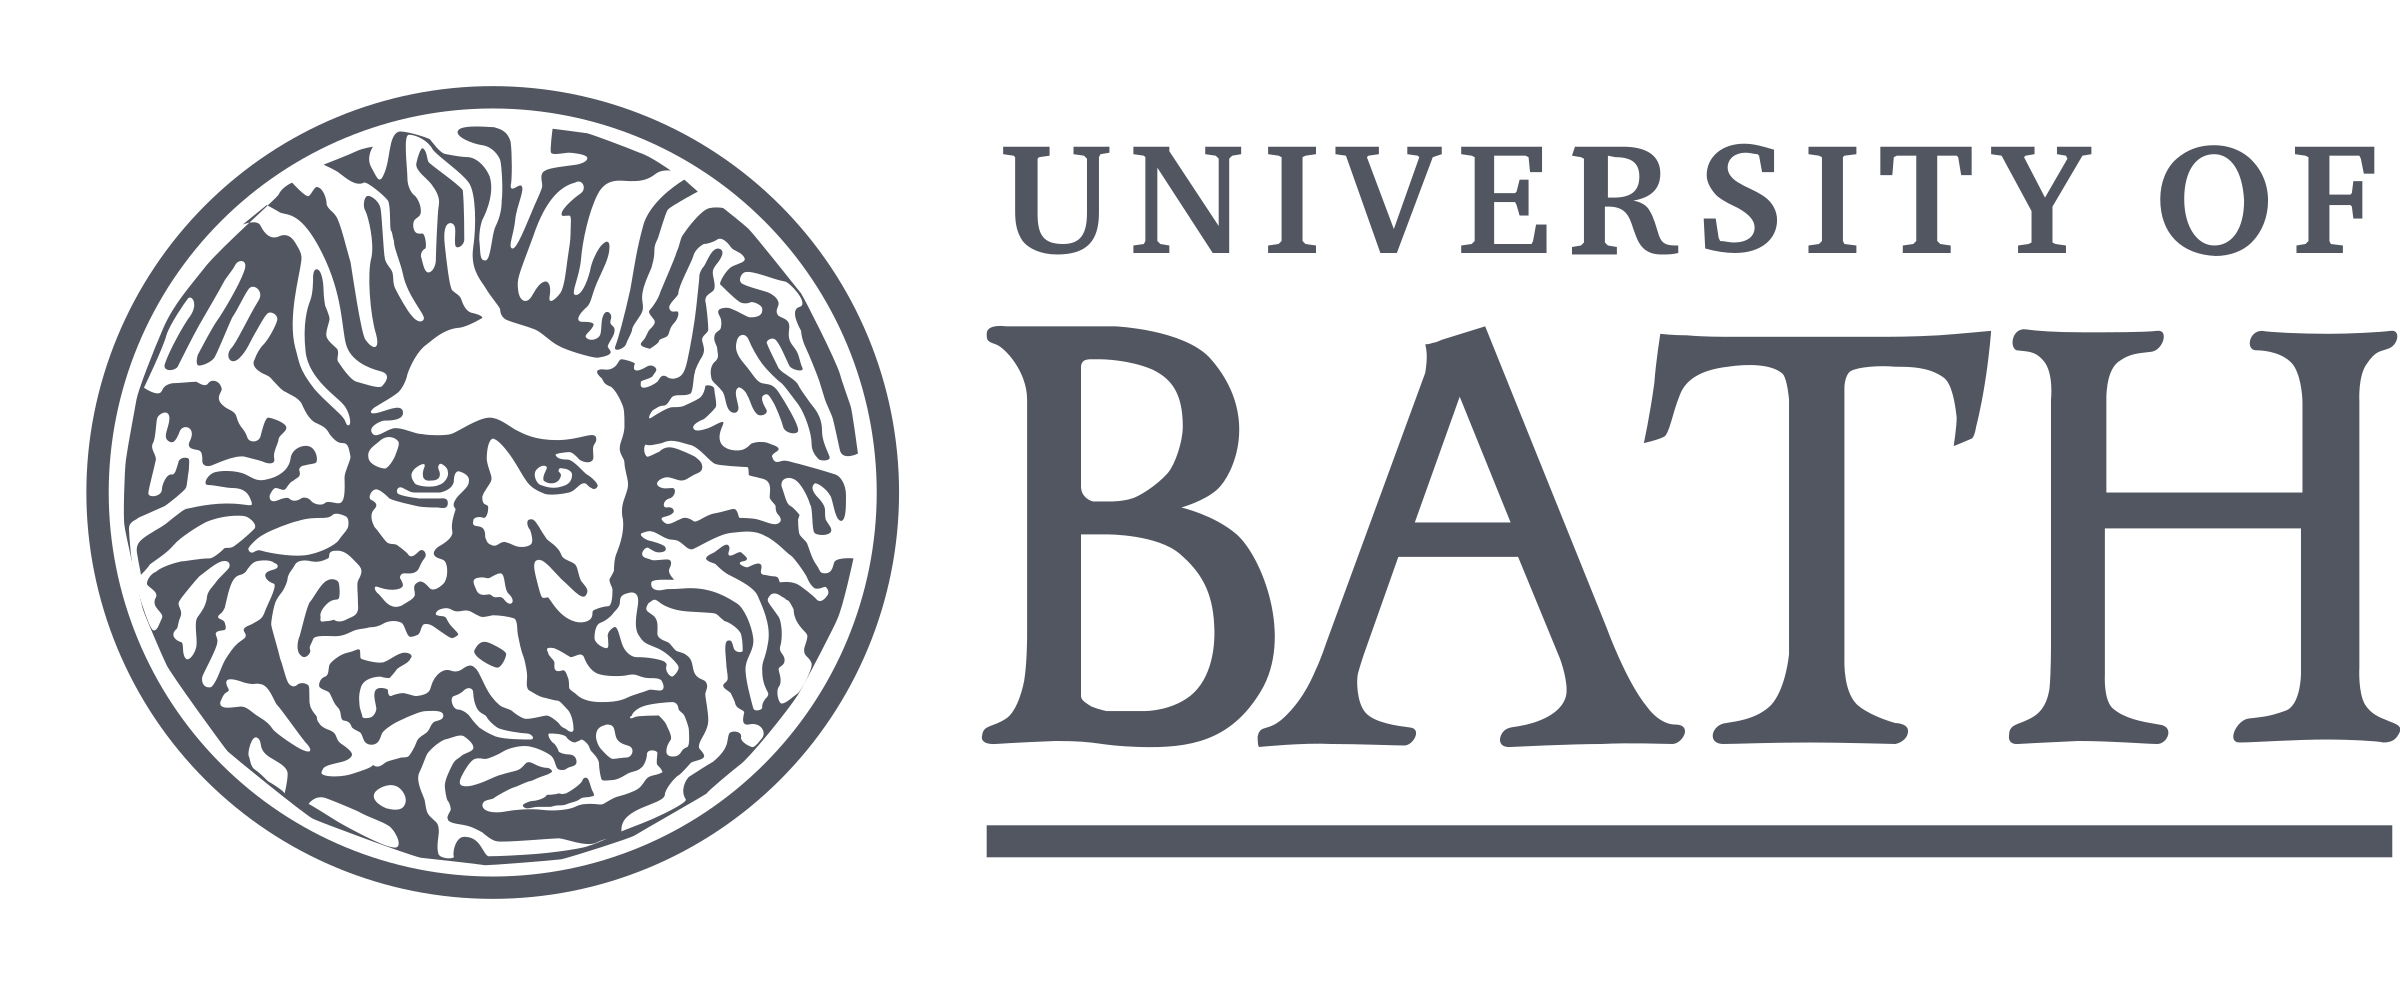 university-of-bath-logo-png-transparent